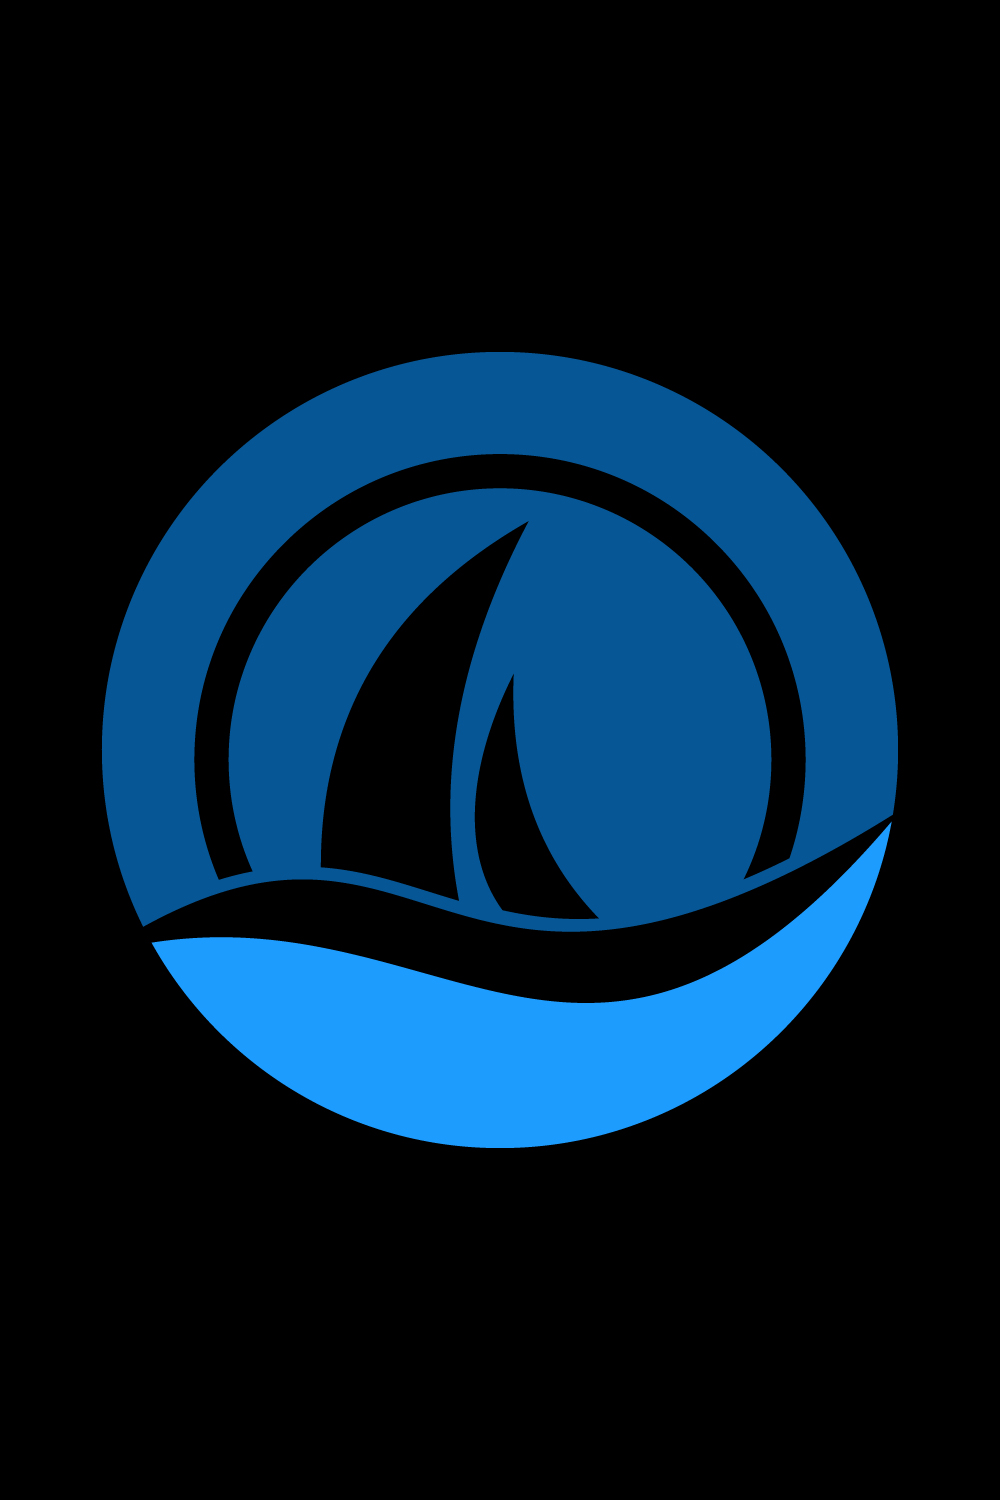 Creative Boat logo design, Vector design template pinterest preview image.